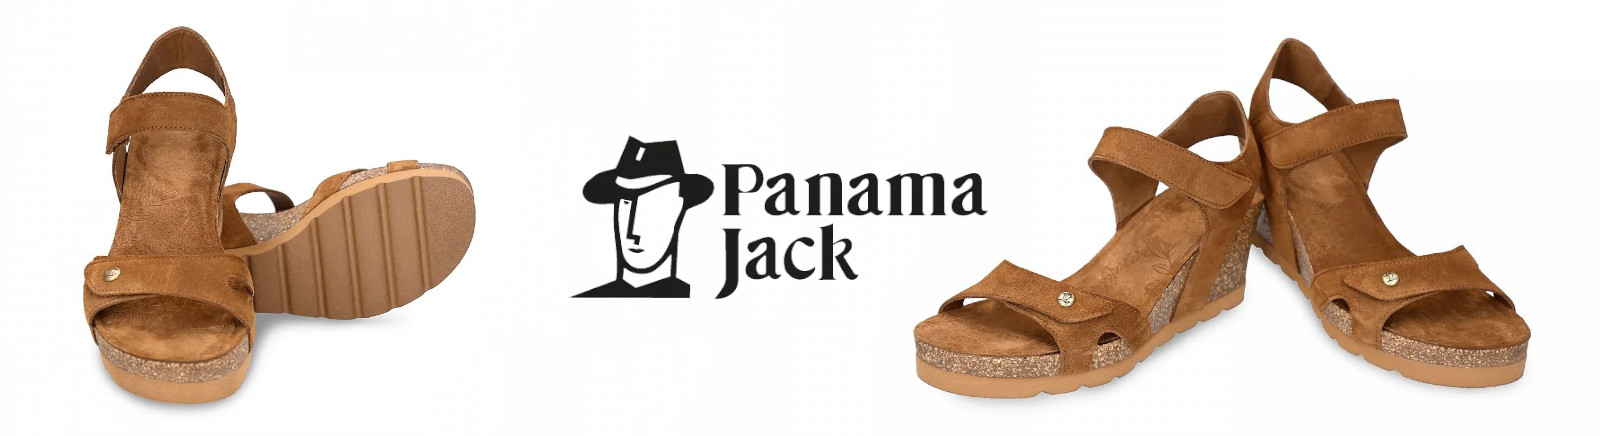 Prange: Panama Jack Winter Boots für Damen online shoppen